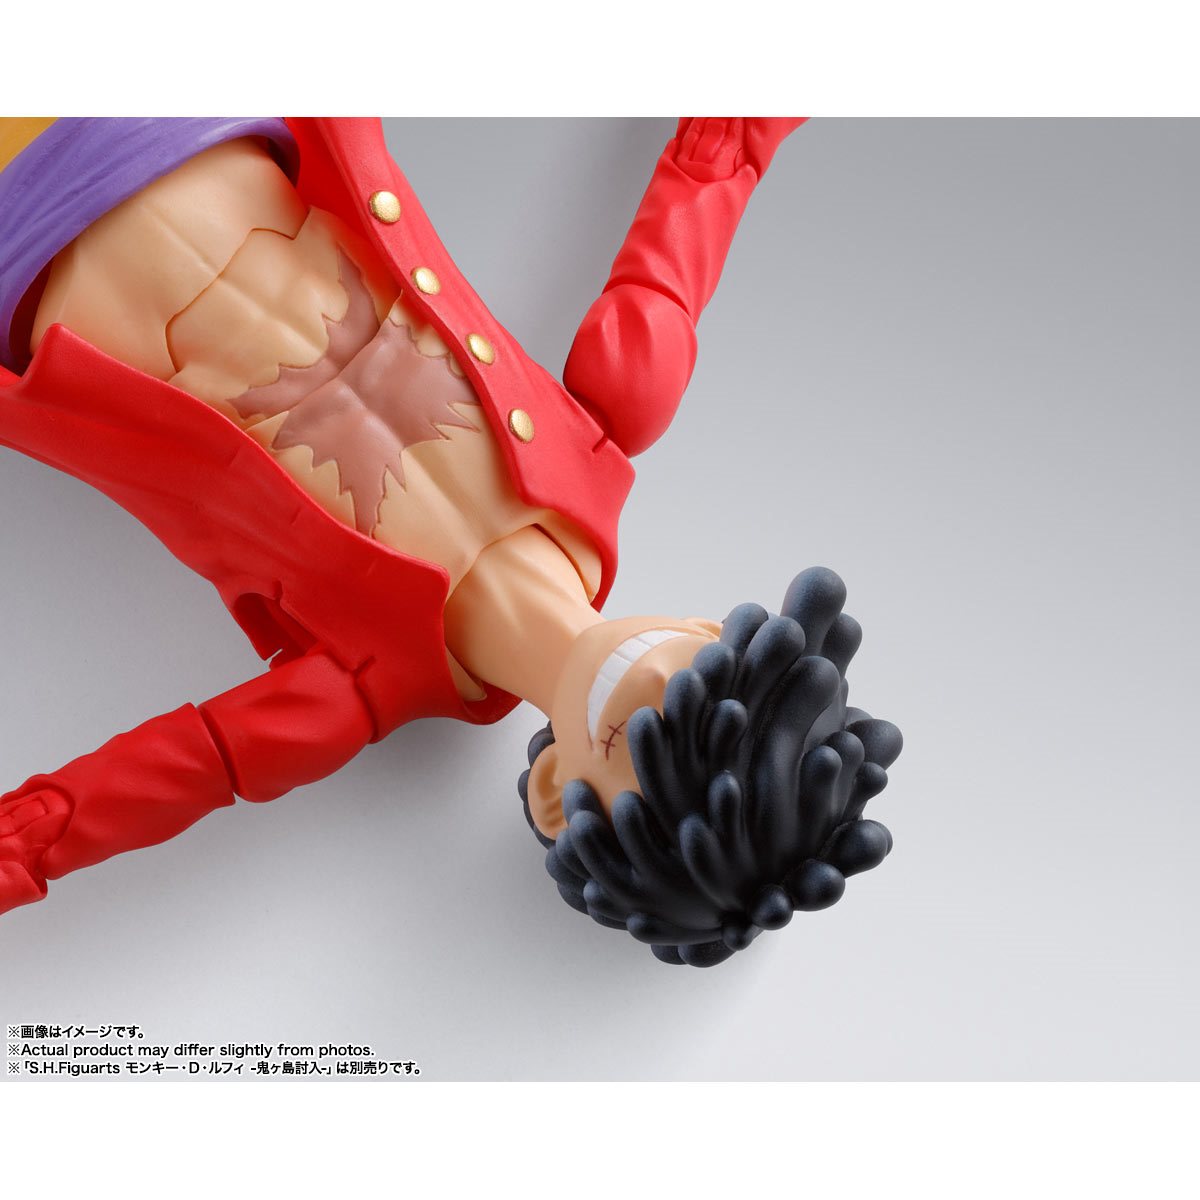 One Piece - Monkey D. Luffy Gear 5 S.H Figuarts Figure